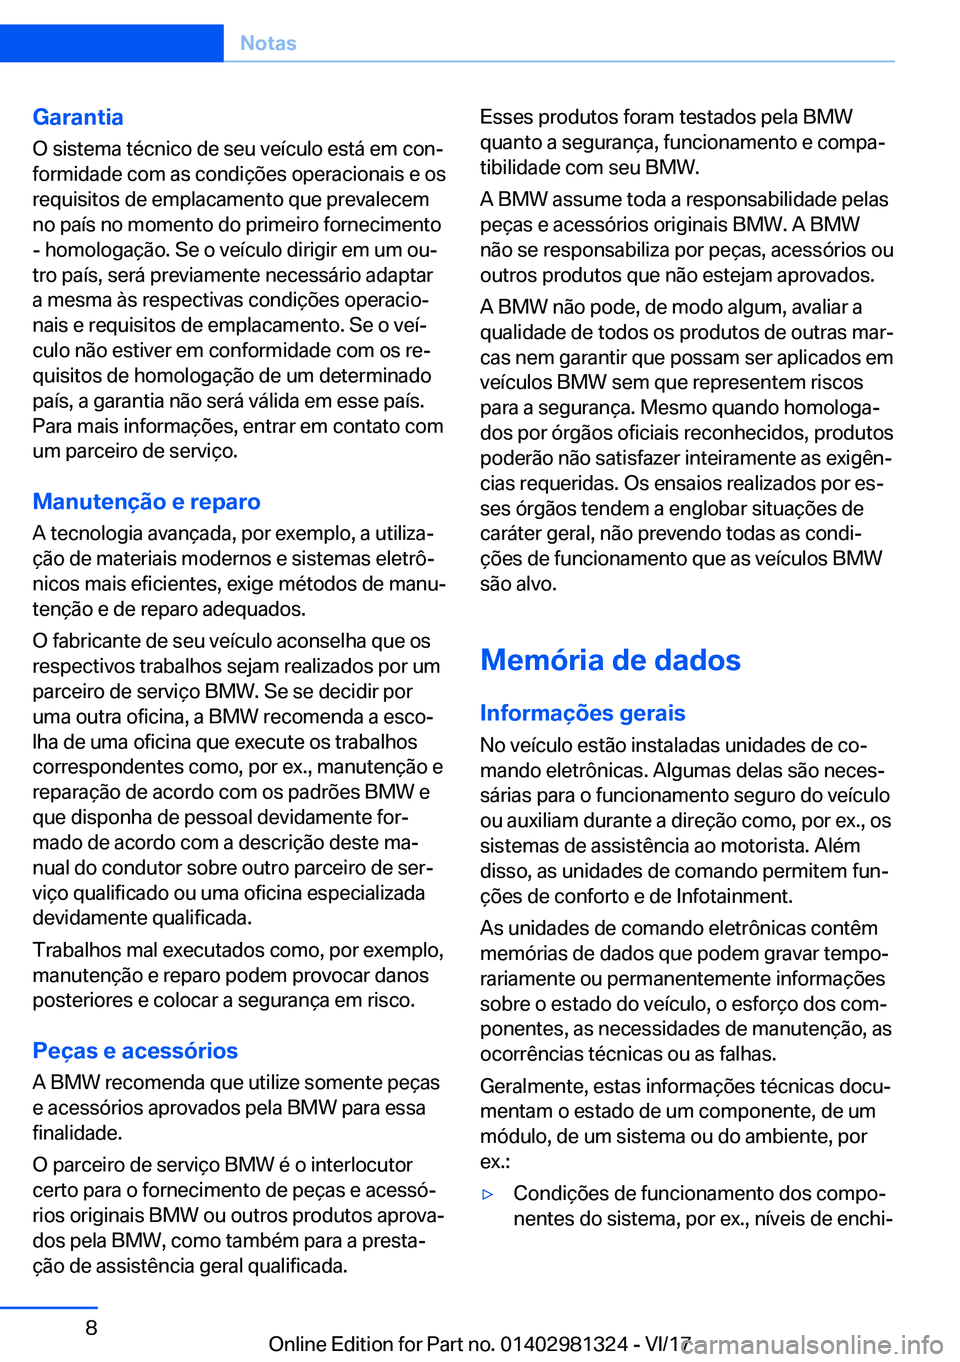 BMW X4 2018  Manual do condutor (in Portuguese) �G�a�r�a�n�t�i�a�O� �s�i�s�t�e�m�a� �t�é�c�n�i�c�o� �d�e� �s�e�u� �v�e�